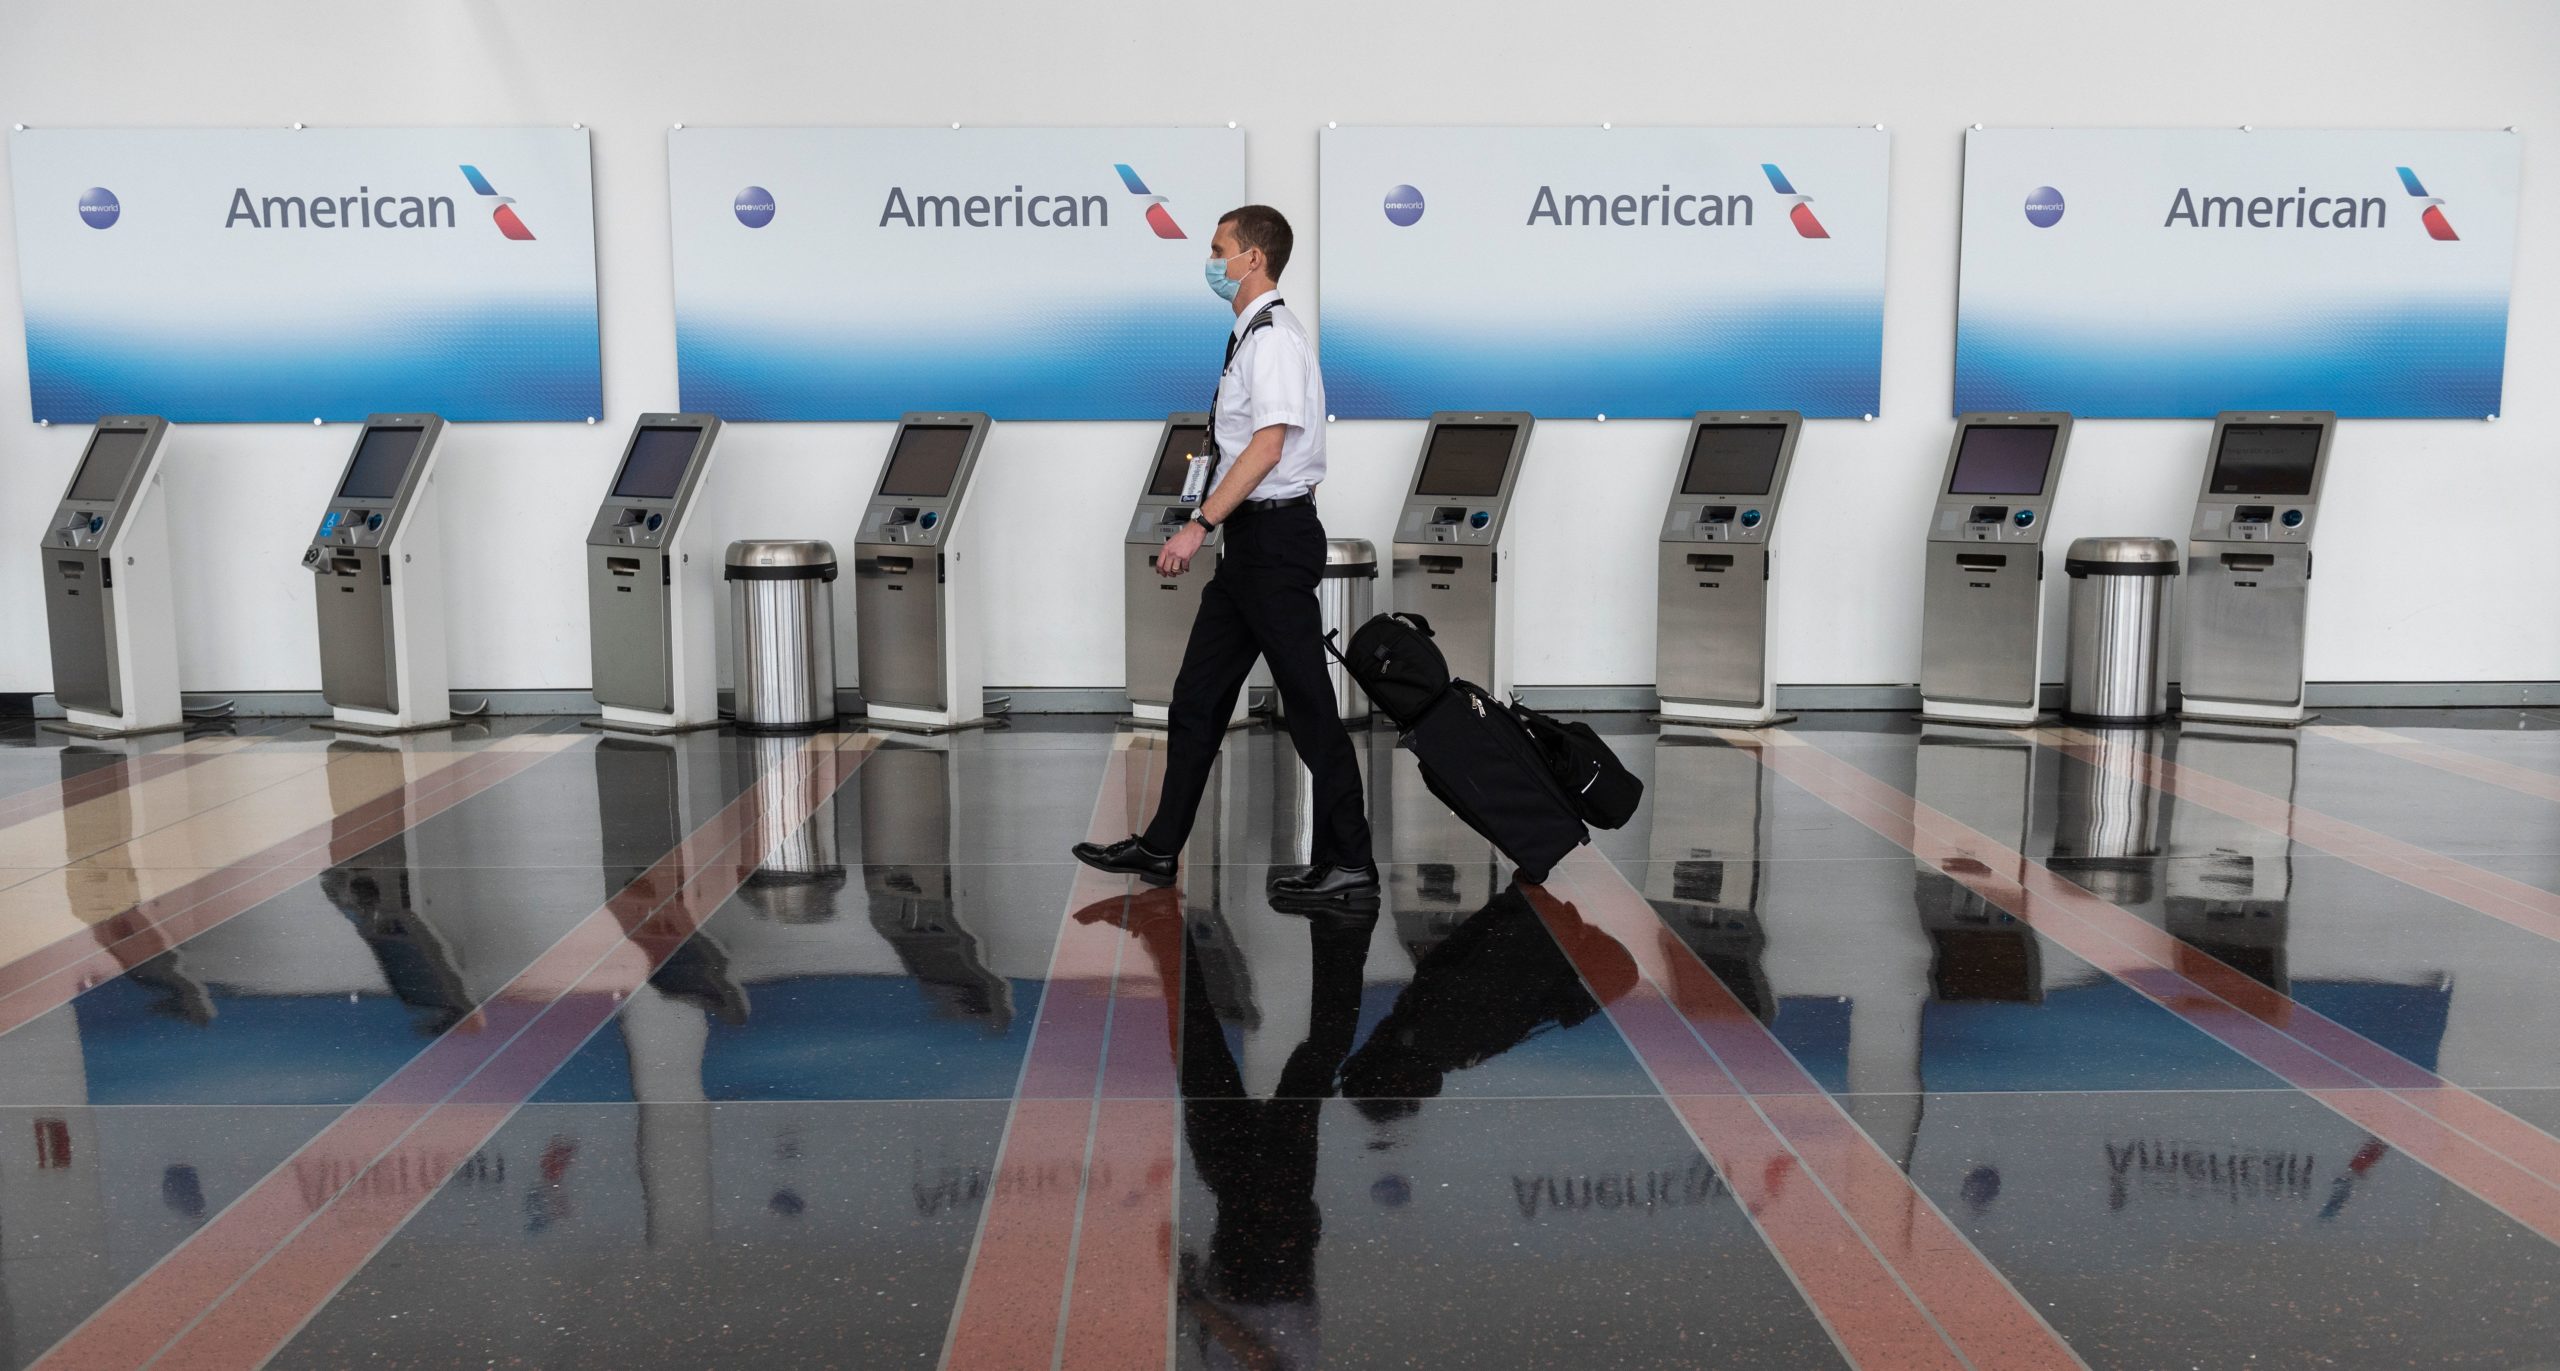 Coronavirus prompts American Airways to warn 25,000 staff on potential job cuts